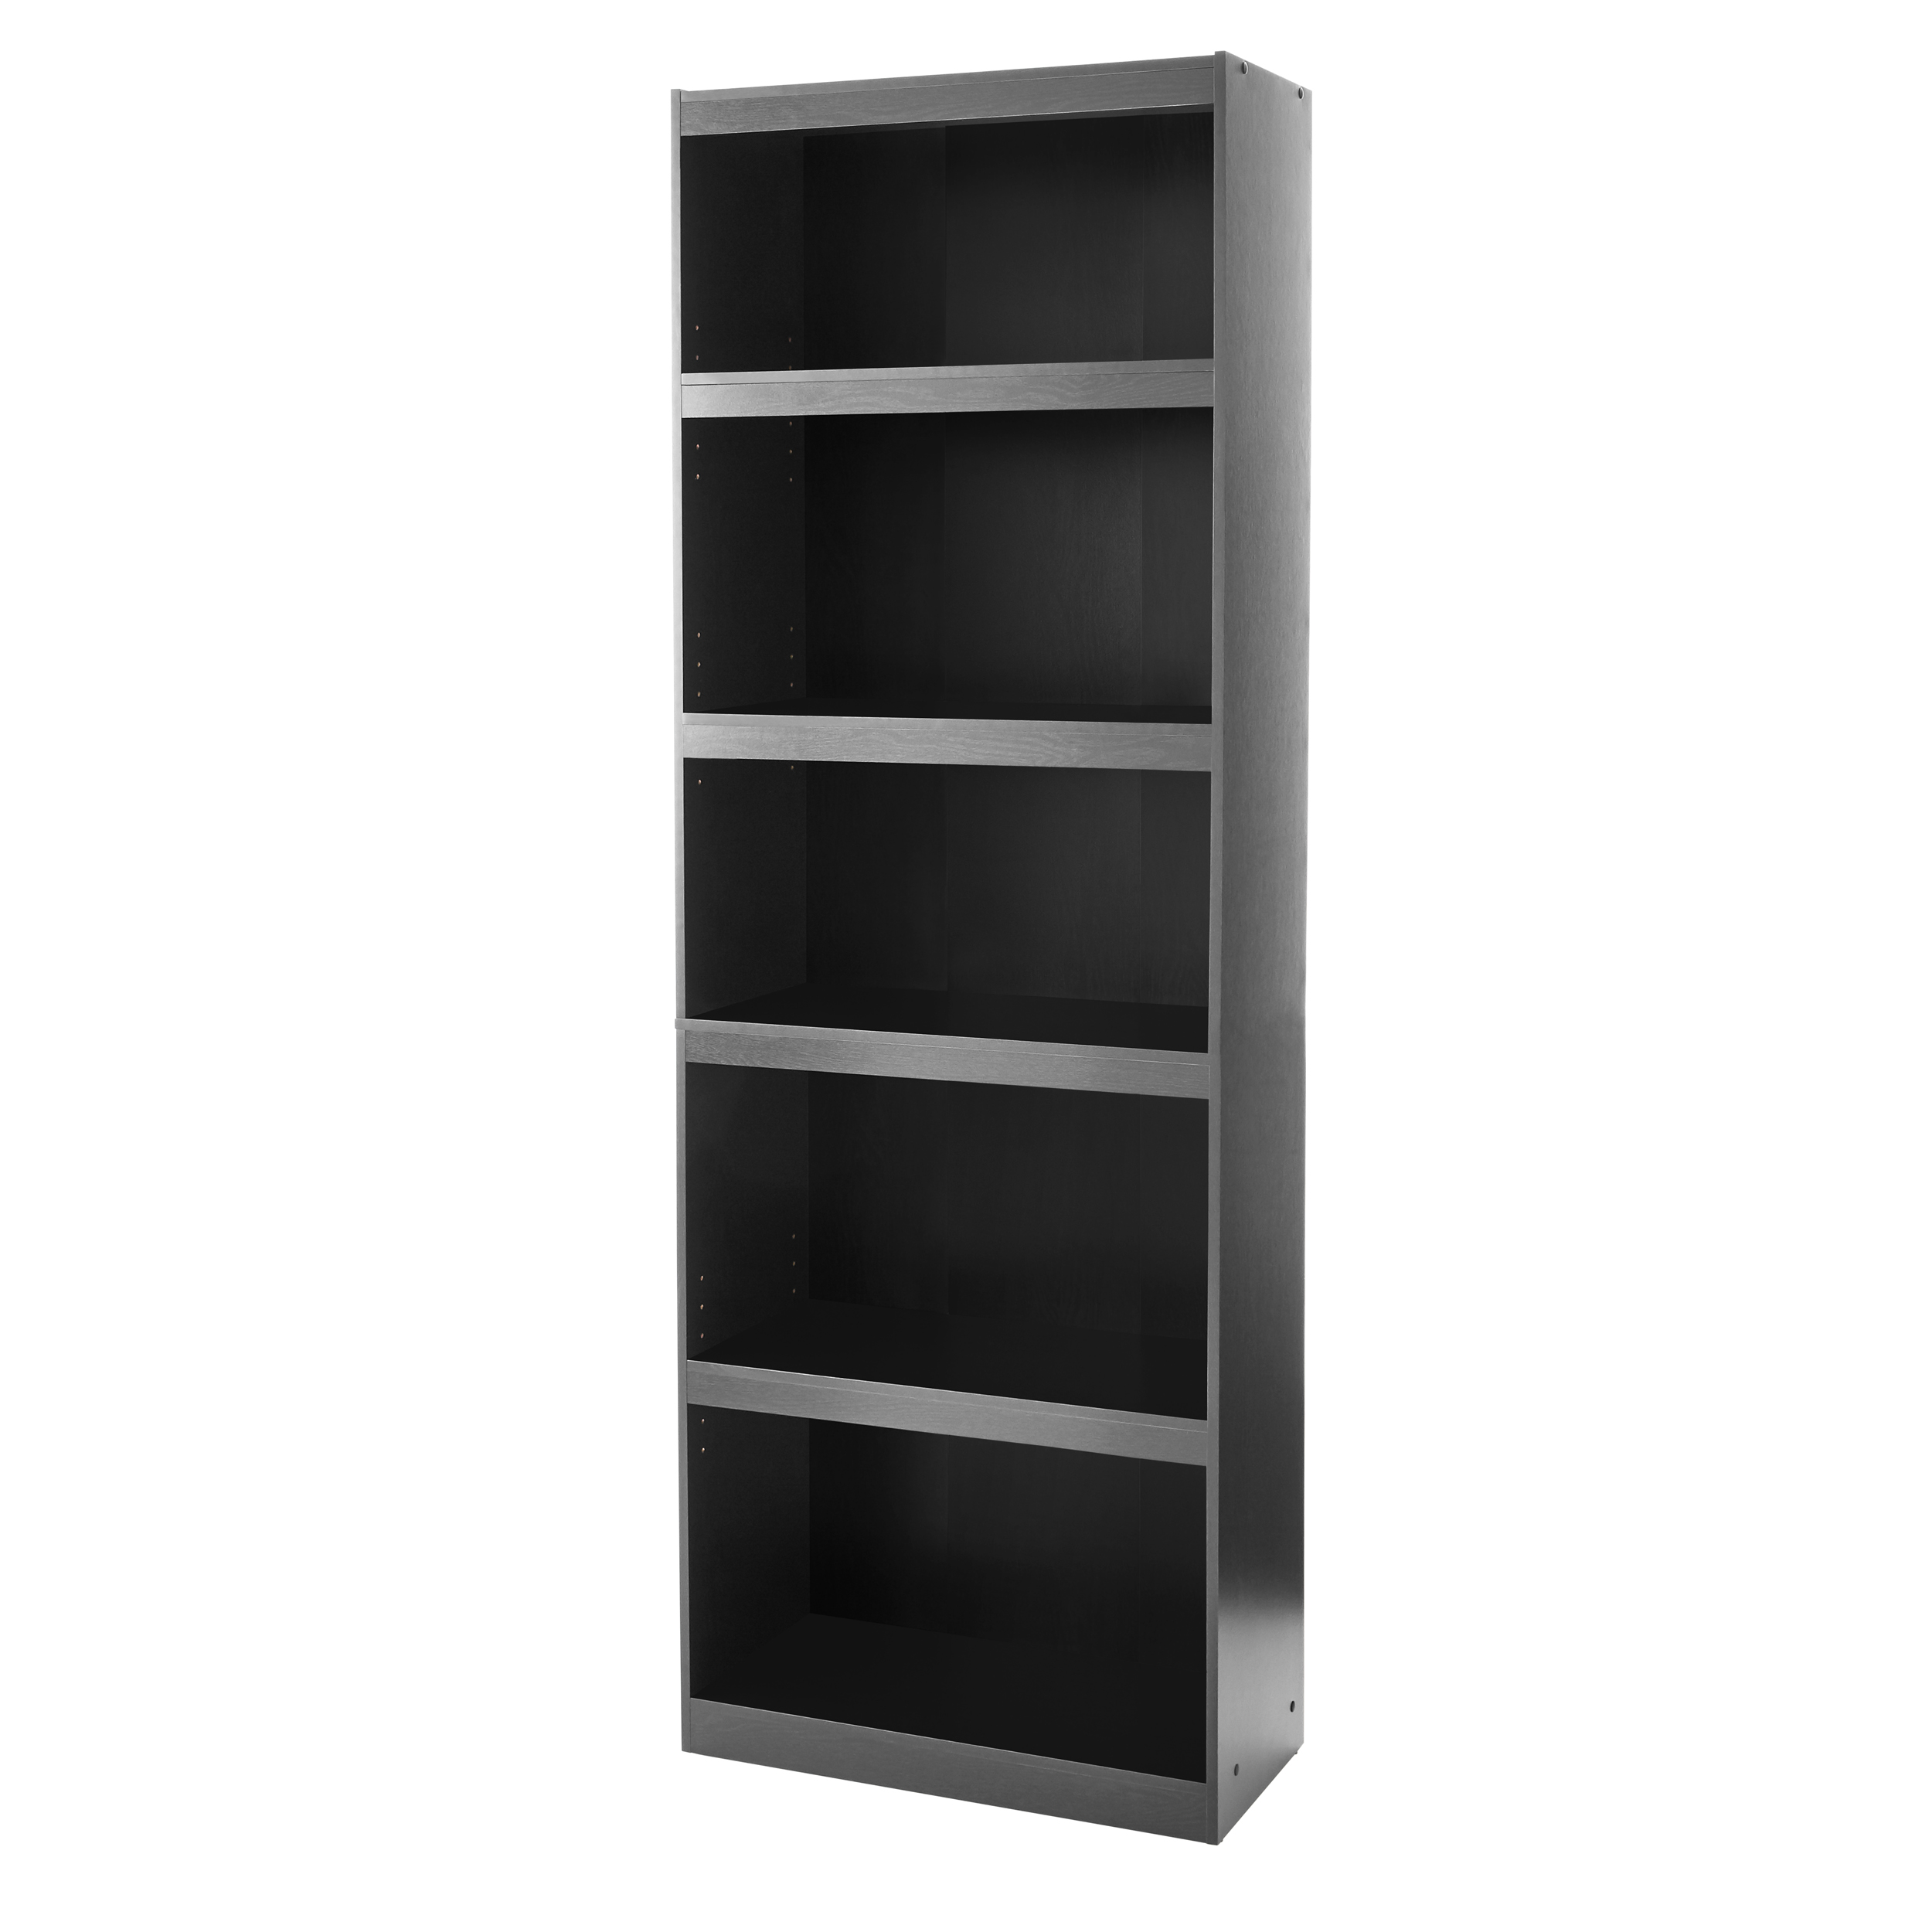 Mainstays Framed 5-Shelf Bookcase, True Black Oak - image 1 of 8